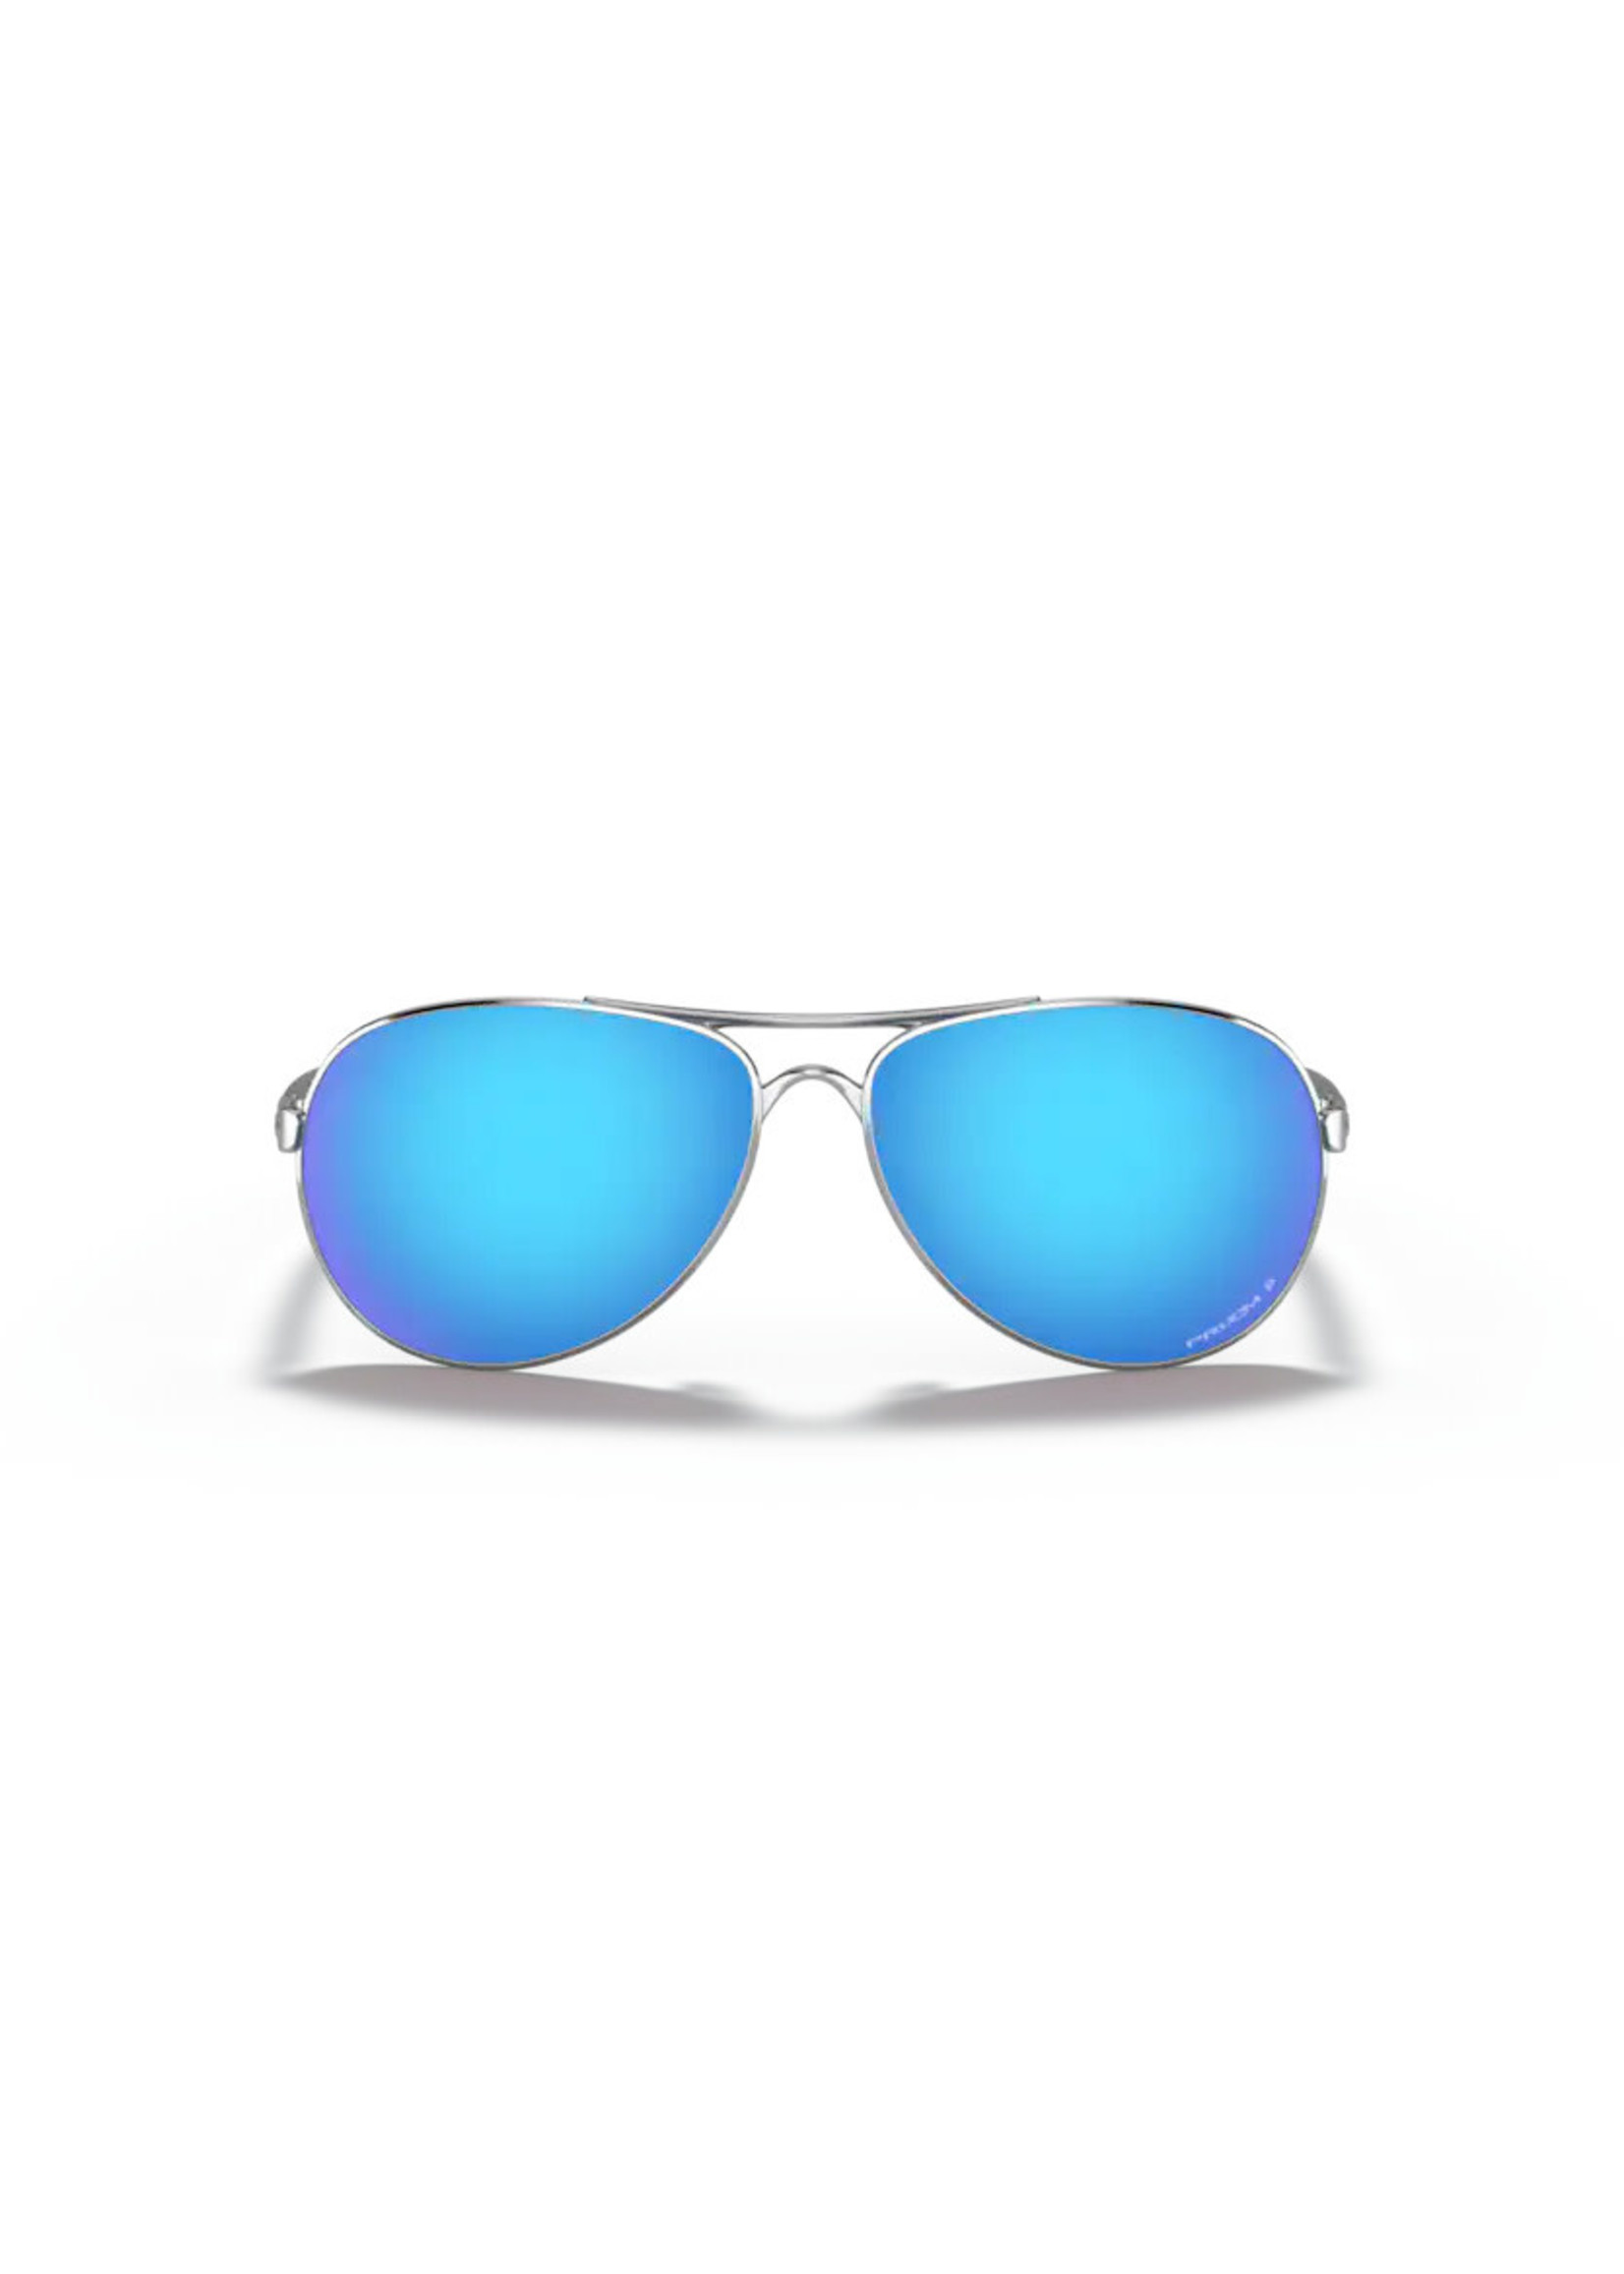 OAKLEY Feedback PRIZM Polished Chrome Sunglasses-Women's